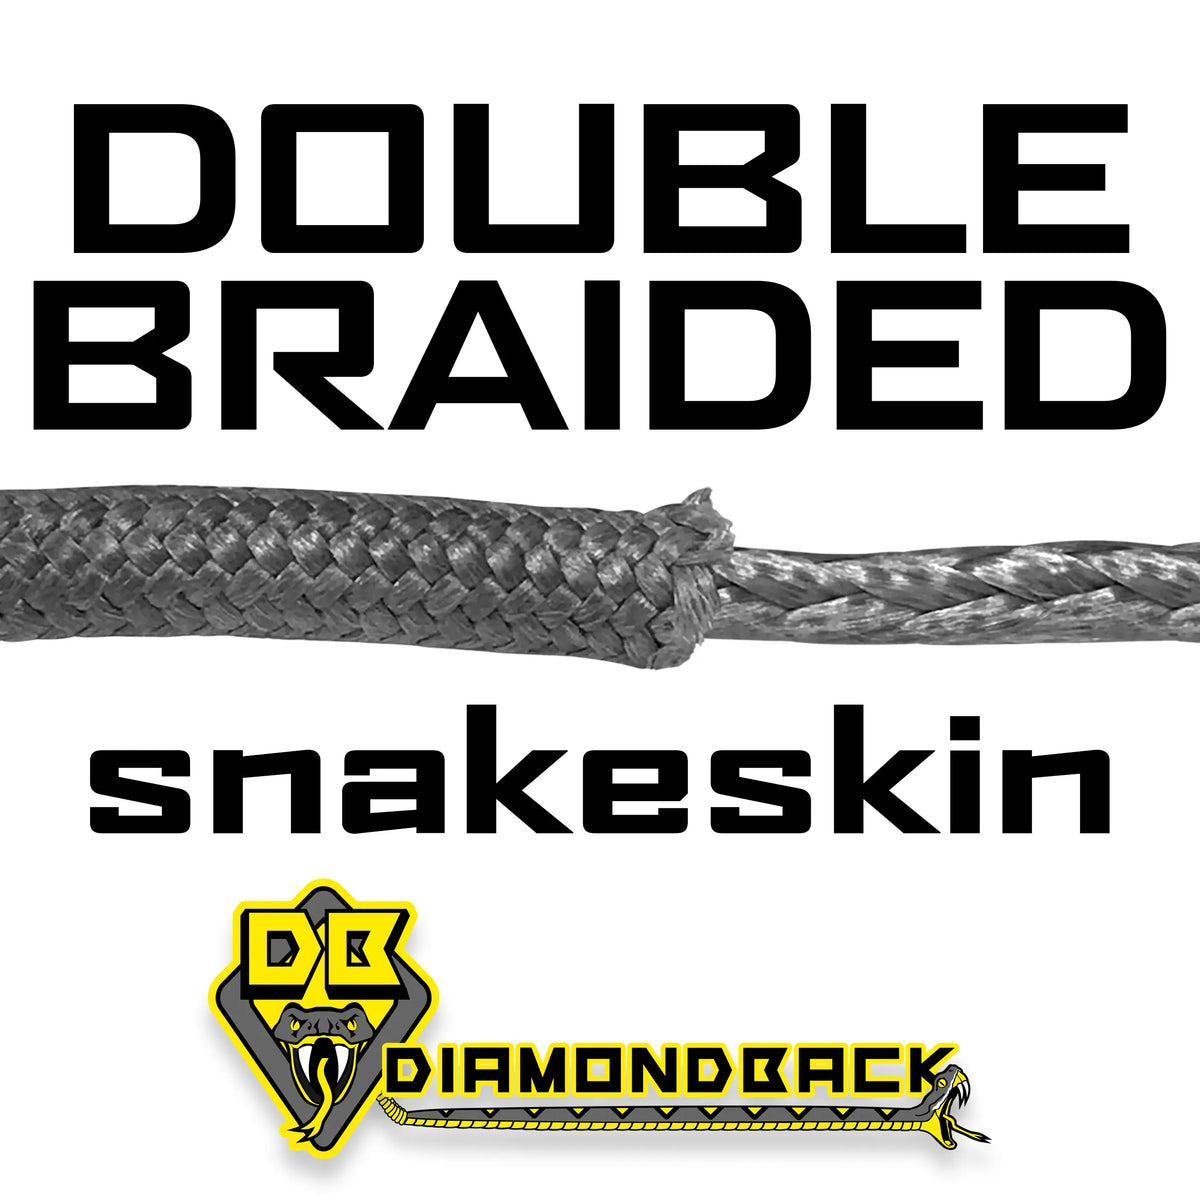 5/16 Diamondback Mainline Winch Rope Custom Splice